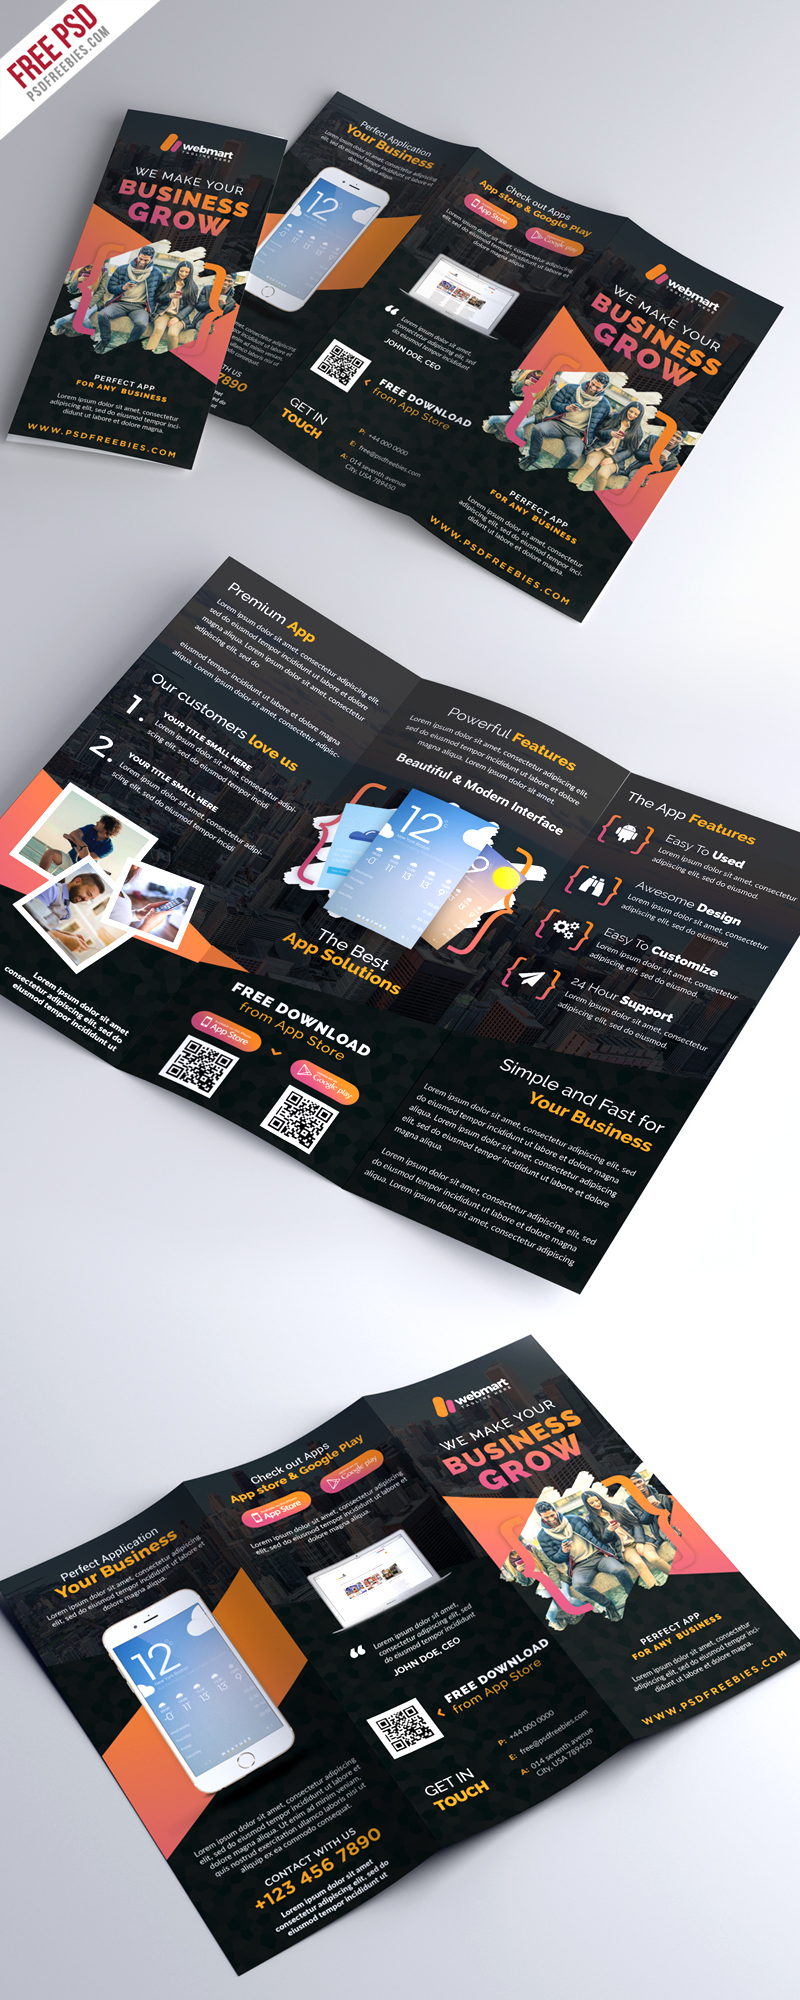 Mobile App Promotion Tri-Fold Brochure PSD Free Download